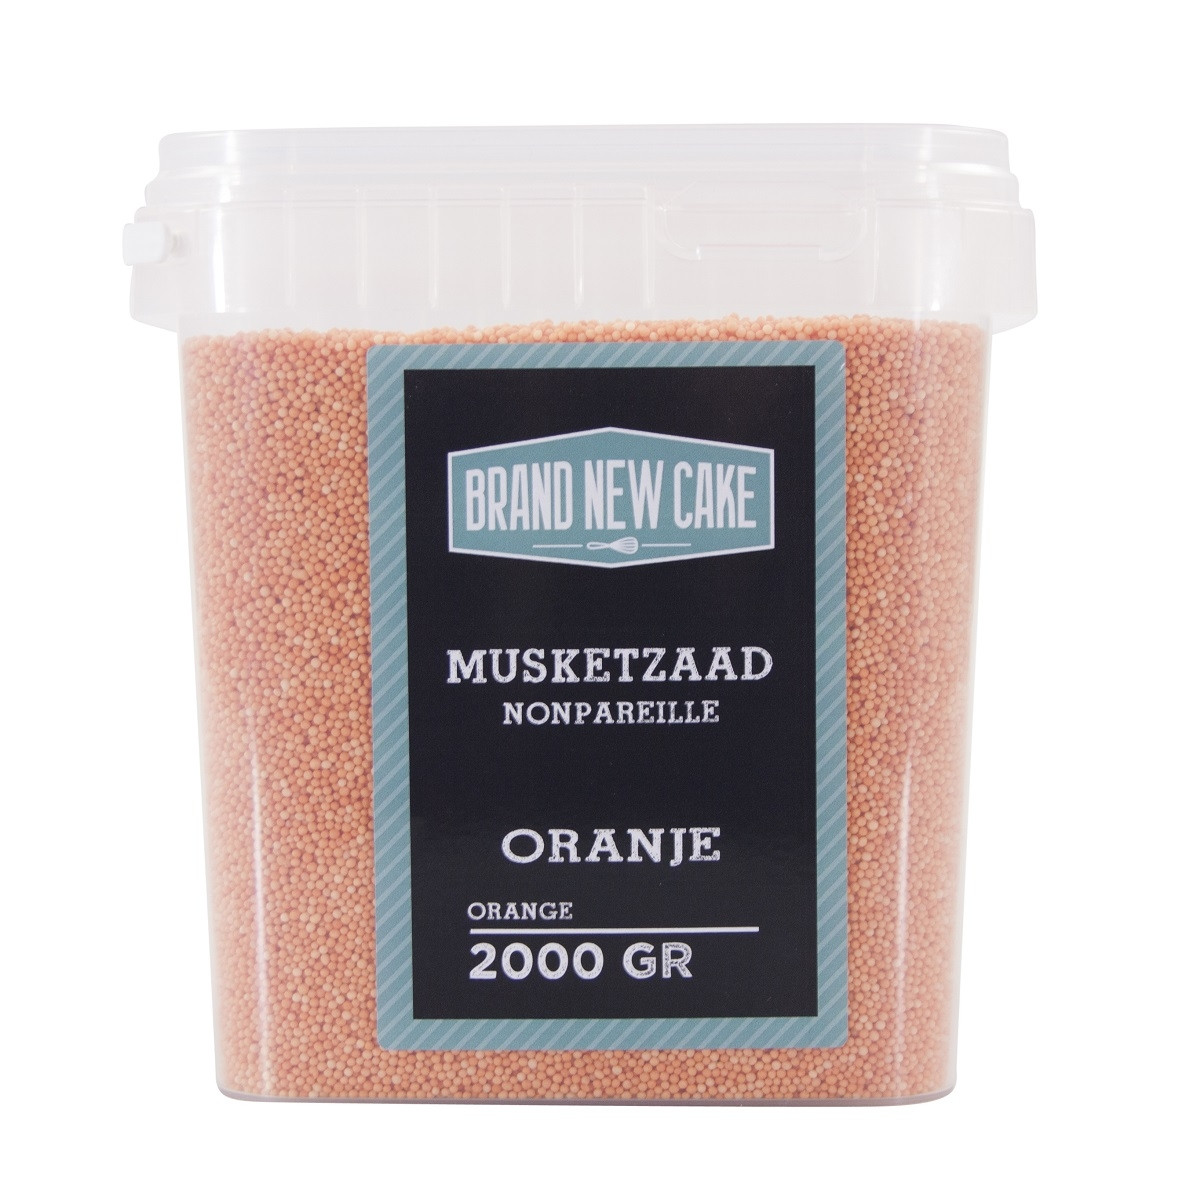 BrandNewCake Musketzaad Oranje 2000gr.